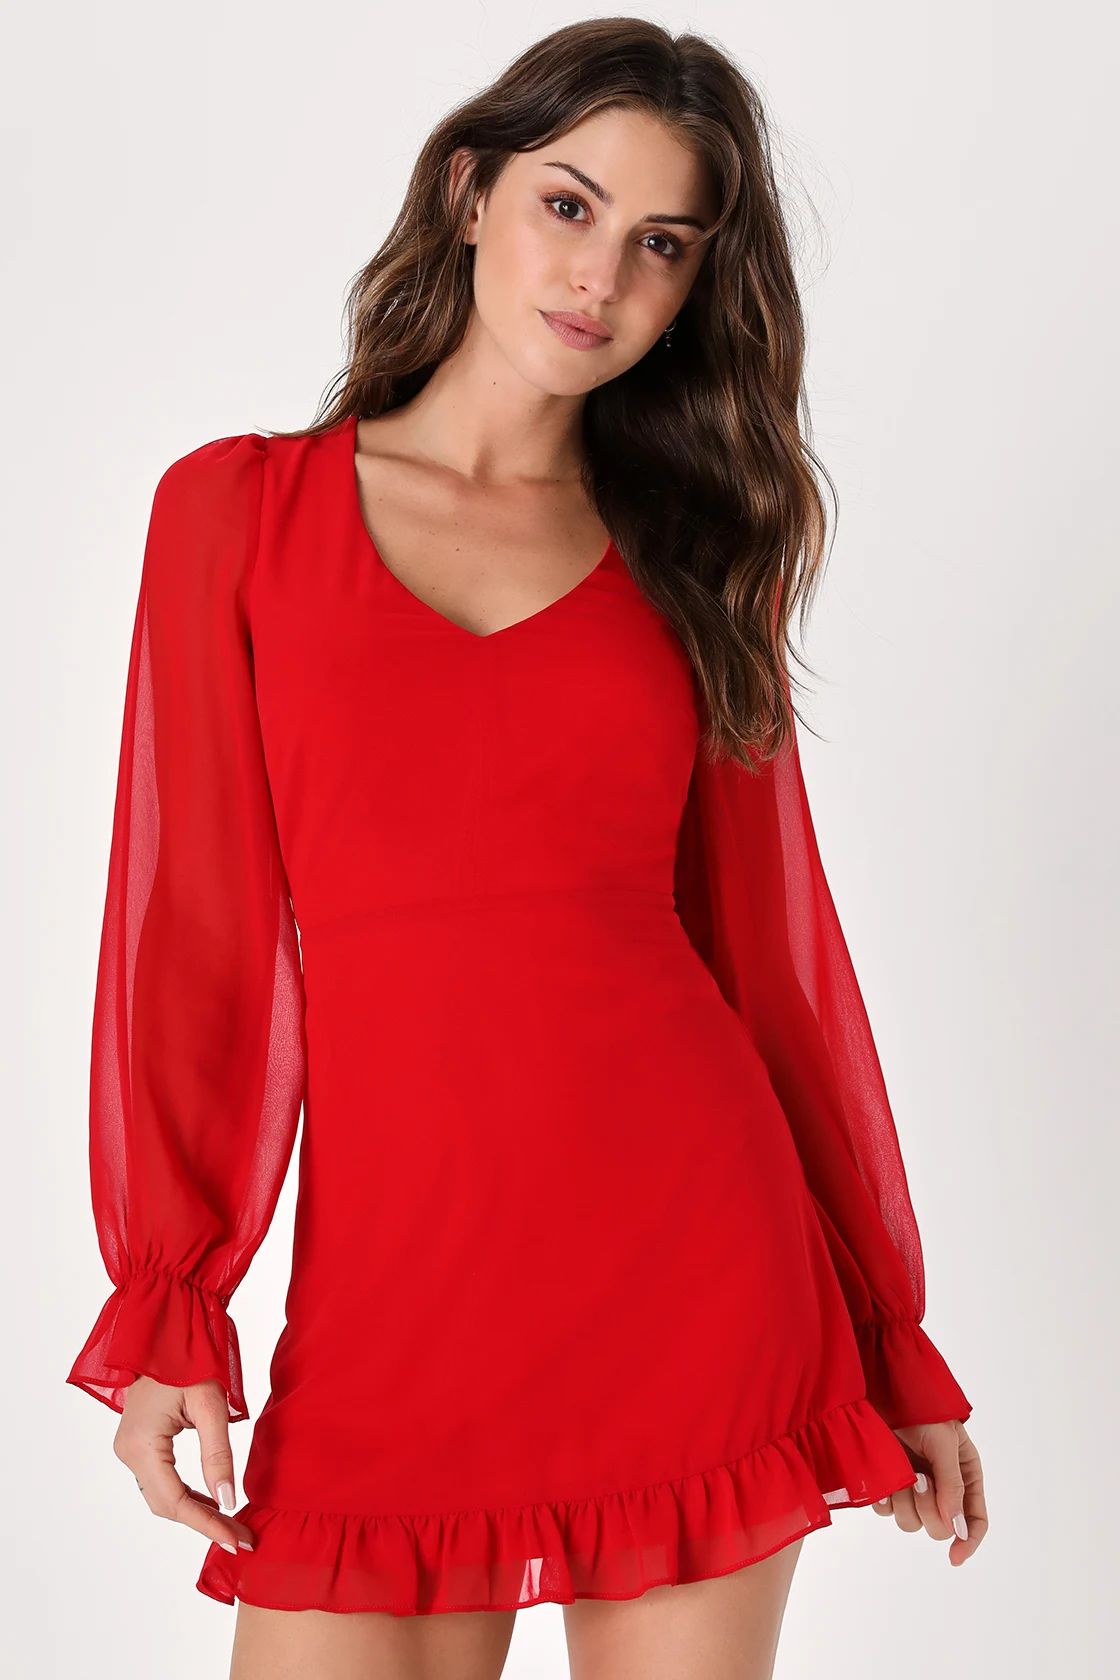 Sheer Attraction Red Long Sleeve Ruffled Mini Dress | Lulus (US)